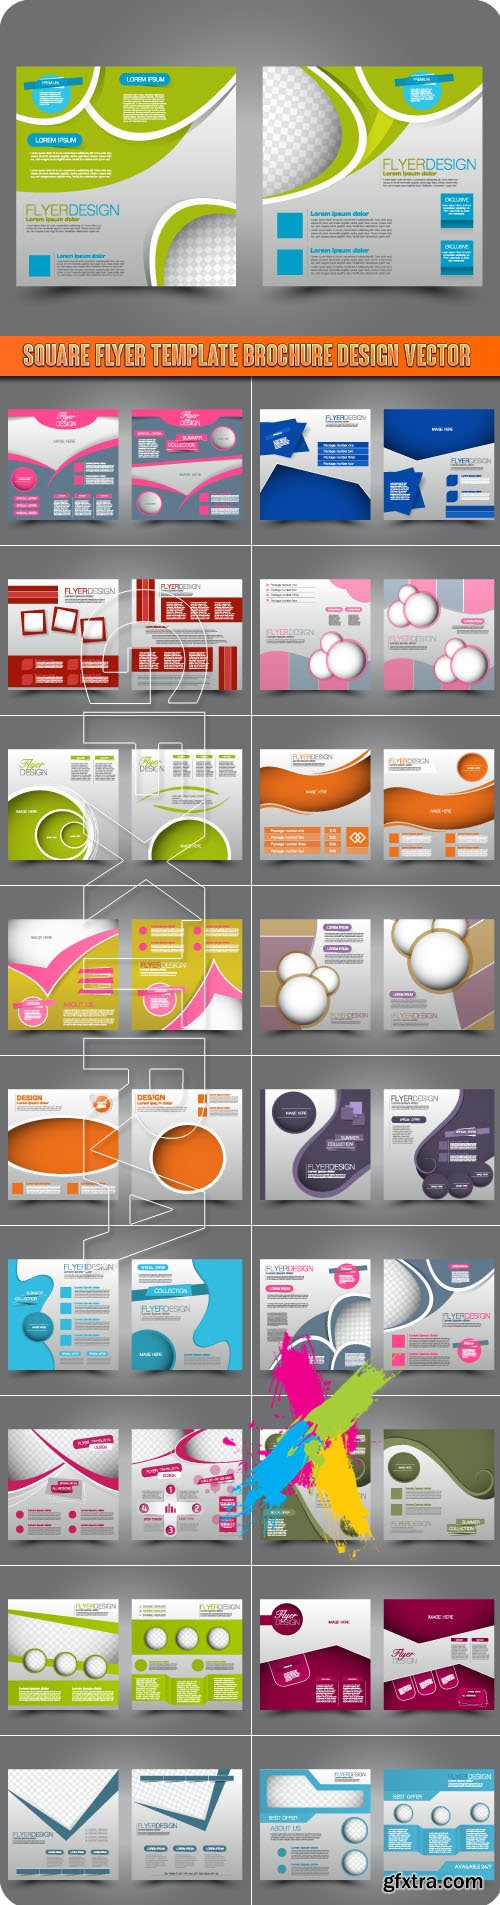 Square flyer template Brochure design vector